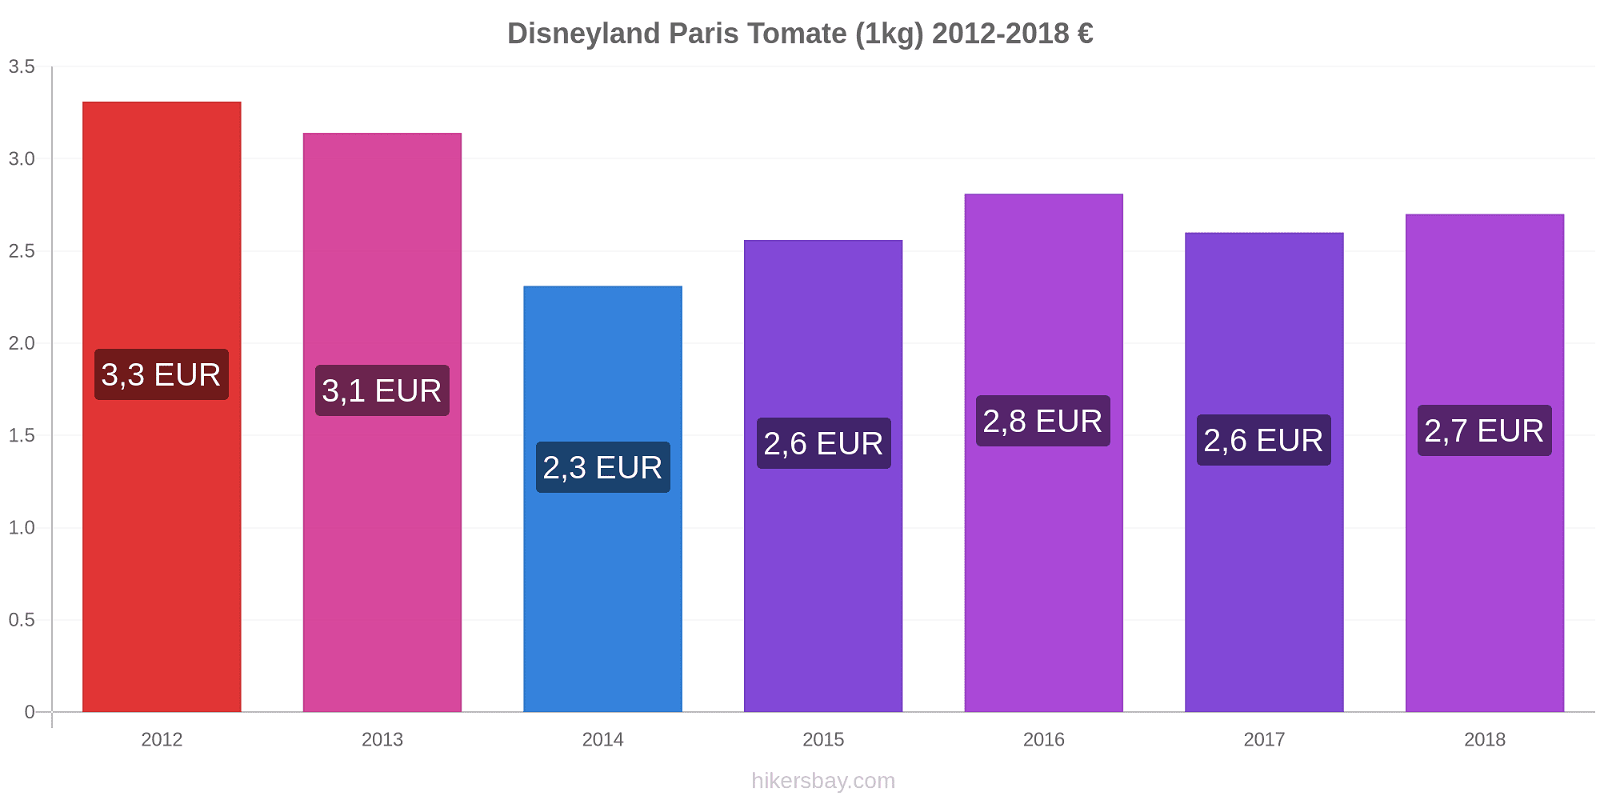 Disneyland Paris modificări de preț Tomate (1kg) hikersbay.com